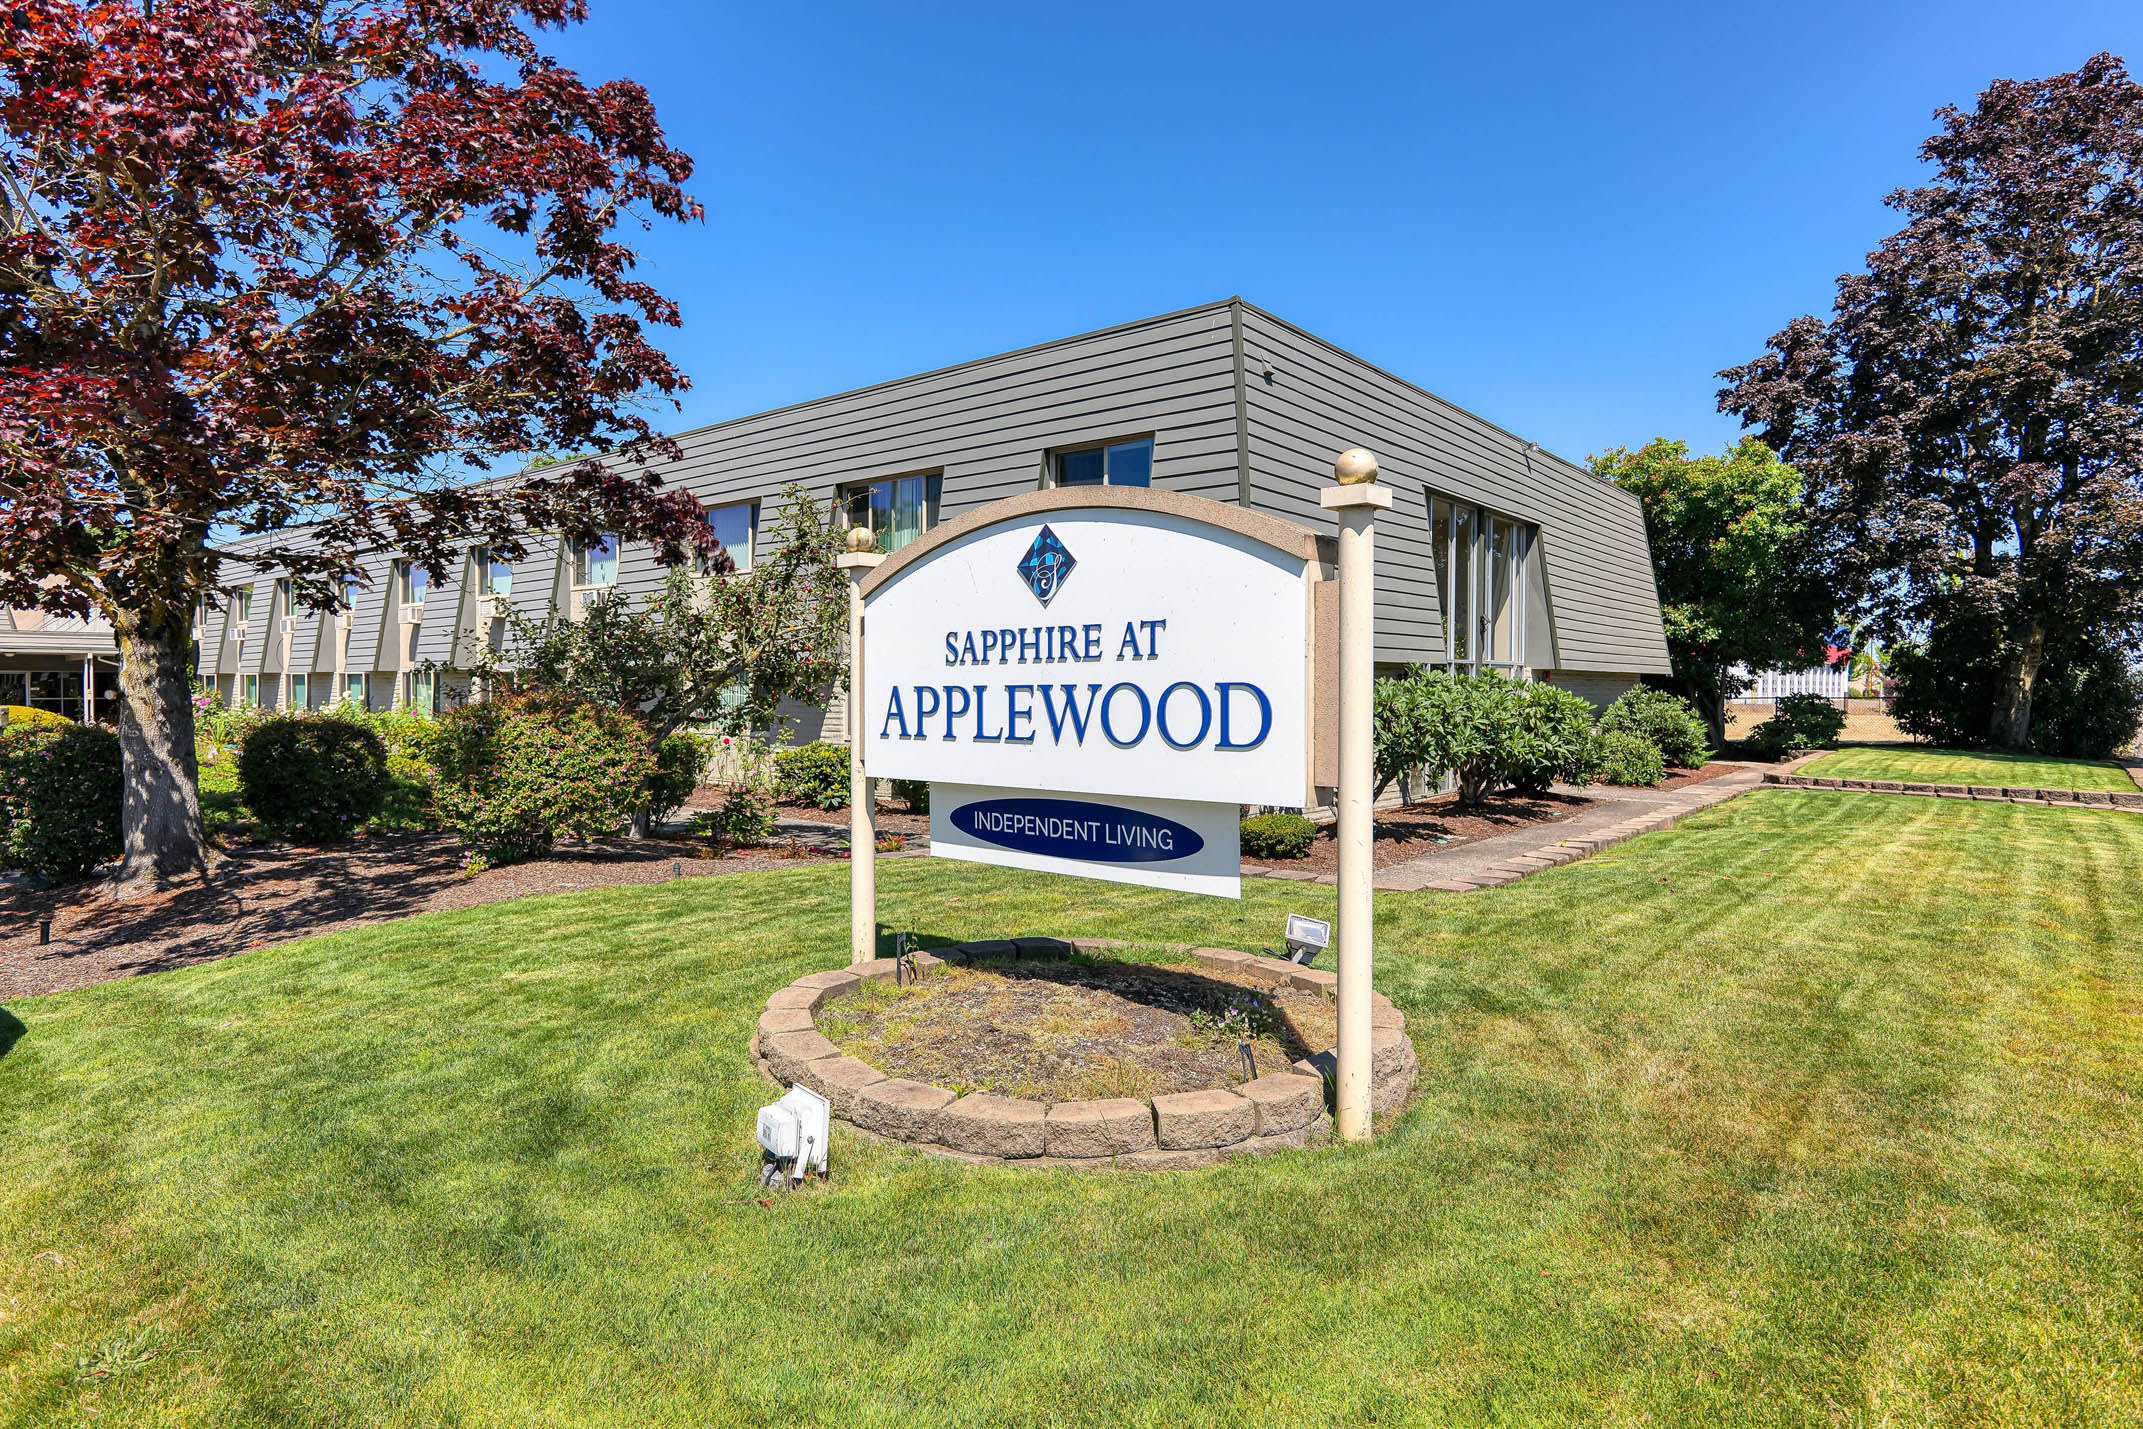 Applewood Retirement outdoor common area